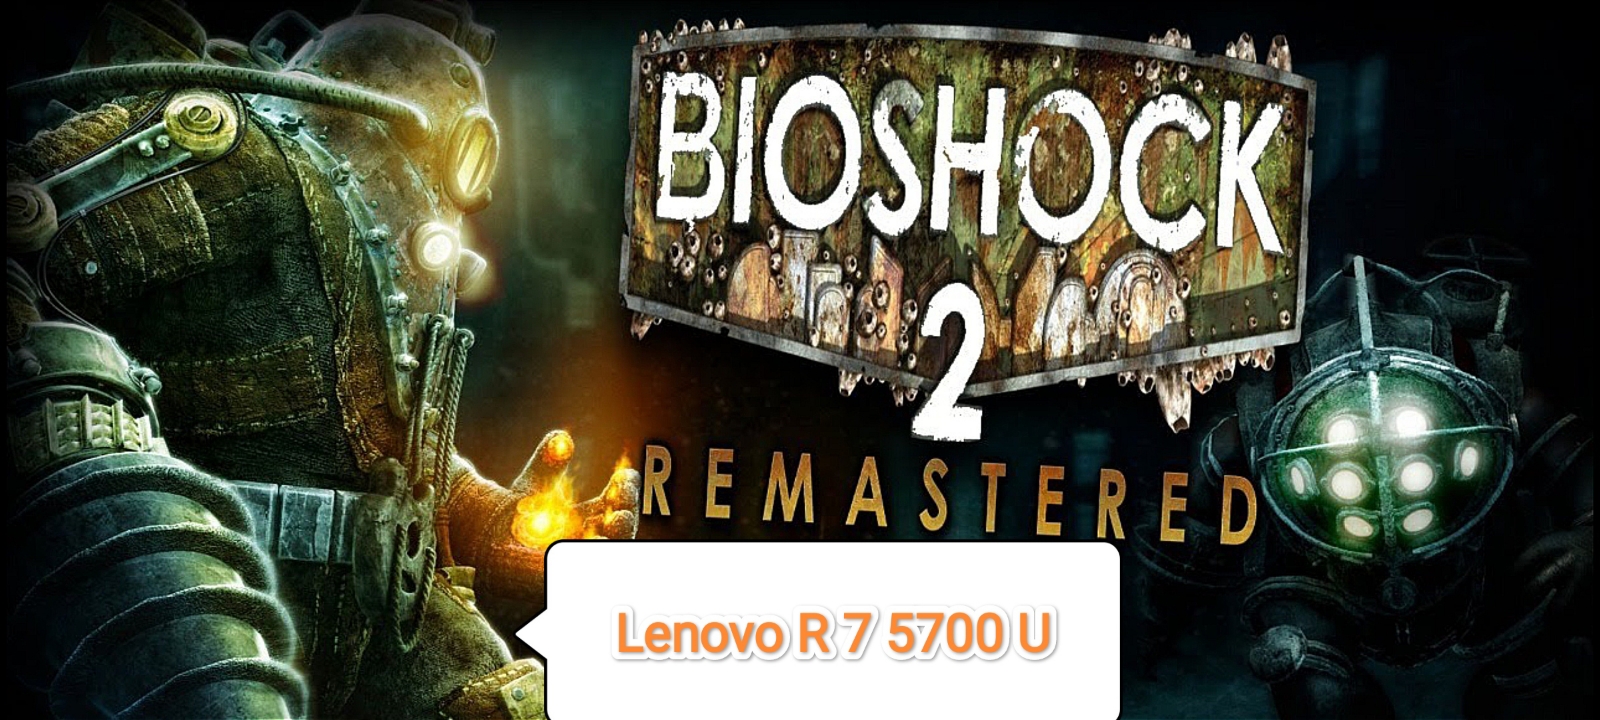 BioShock 2 Remastered v.1.01.22 - настройки графики для 60 фпс на слабом ПК (Lenovo R 7 5700 U)